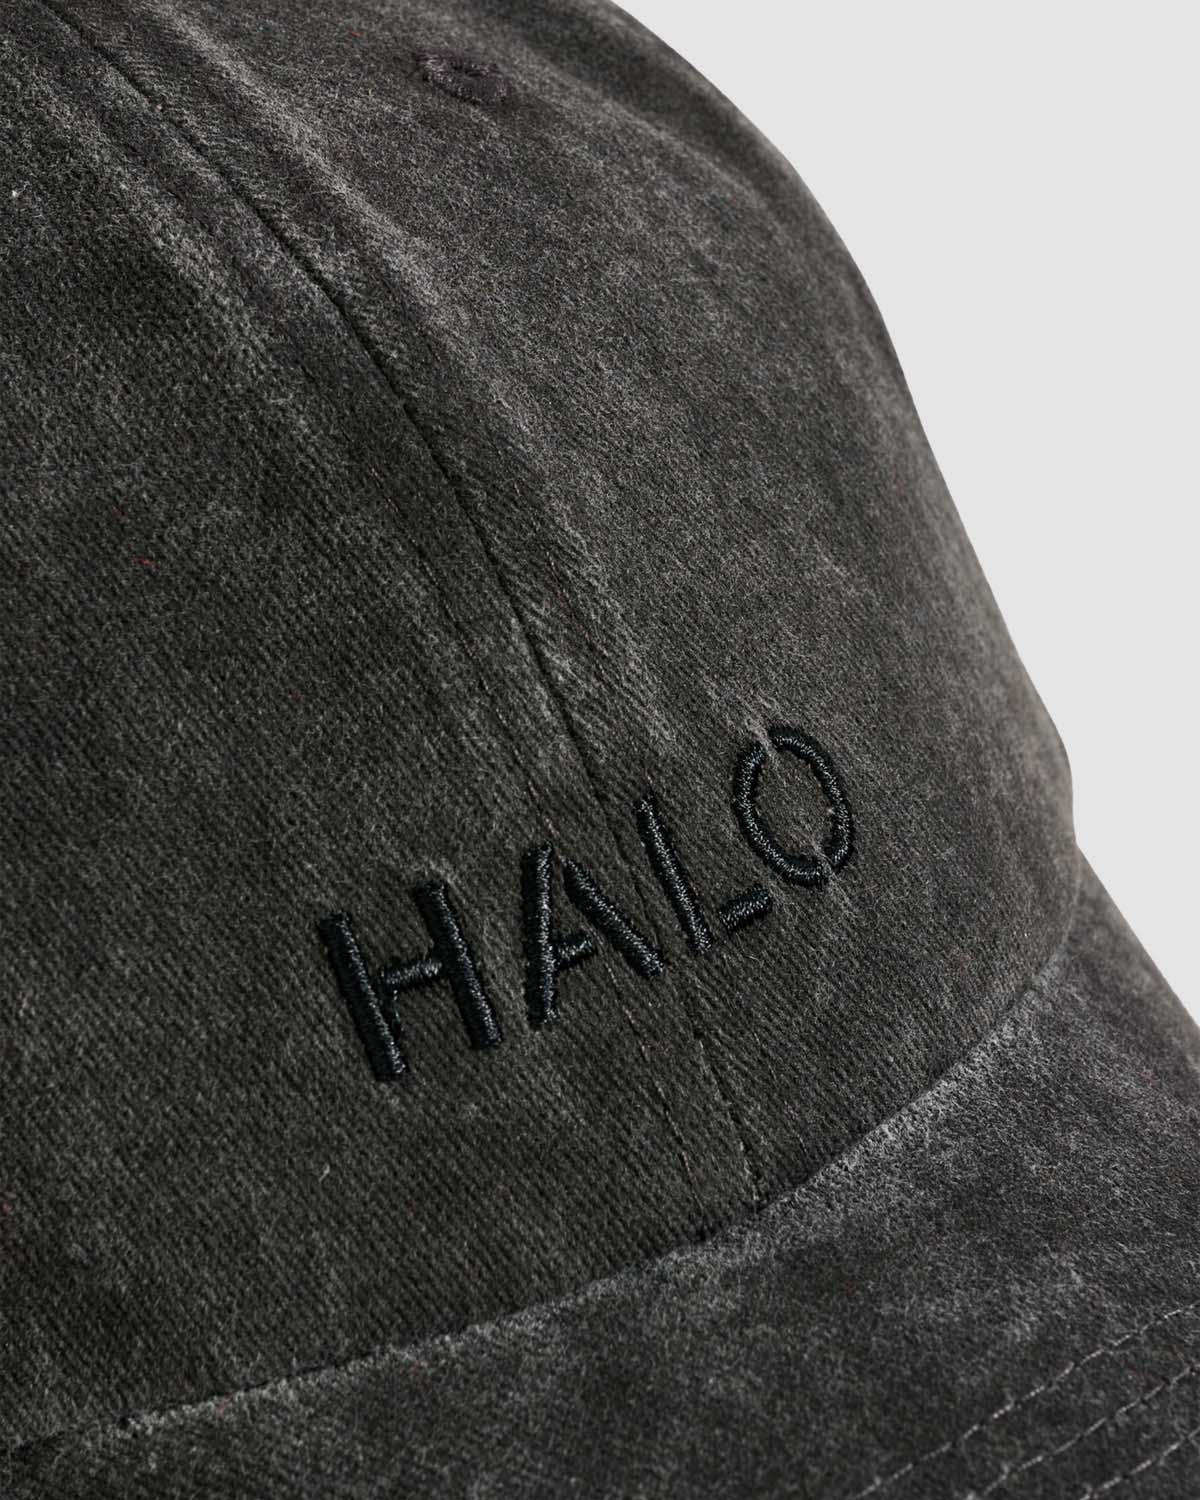 HALO Washed Canvas Cap - Black